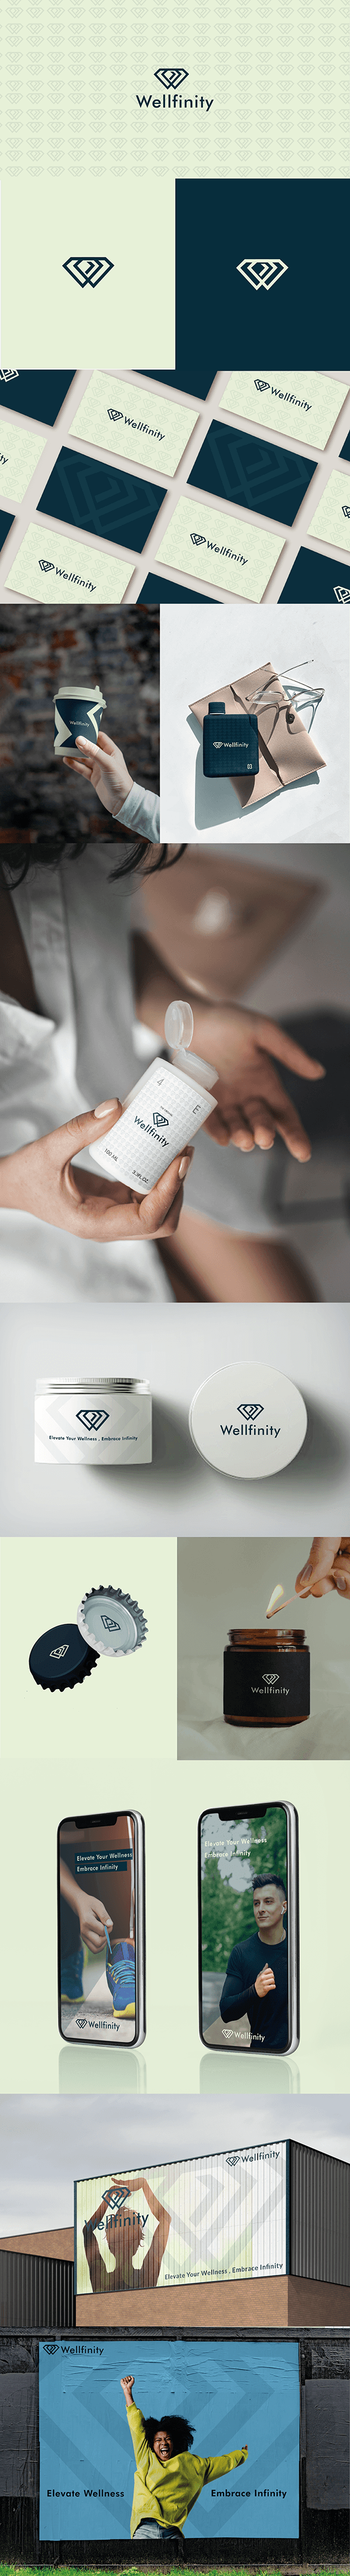 Wellfinity - logo and Brand Identity